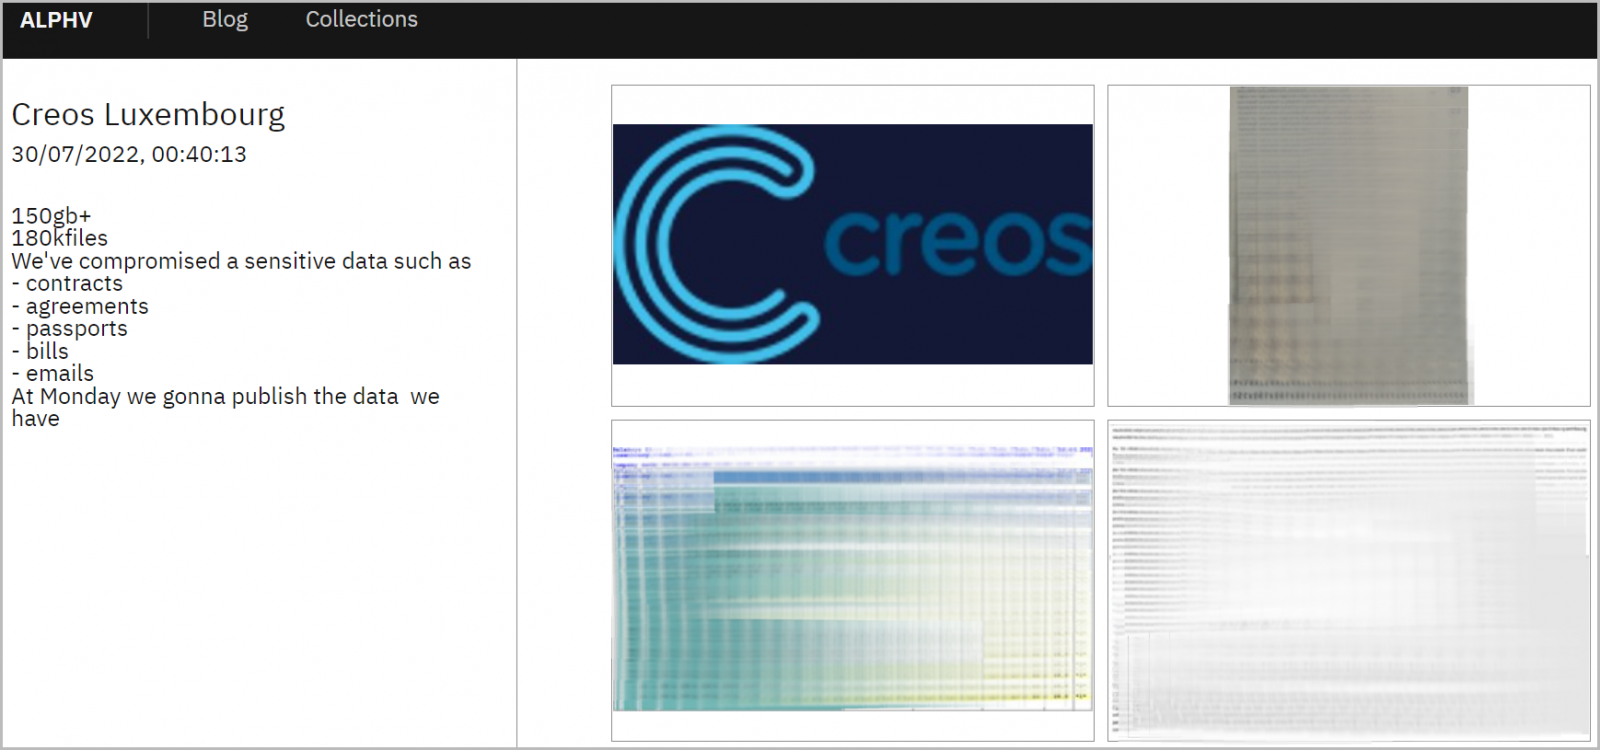 ALPHV adding Creos on extortion site